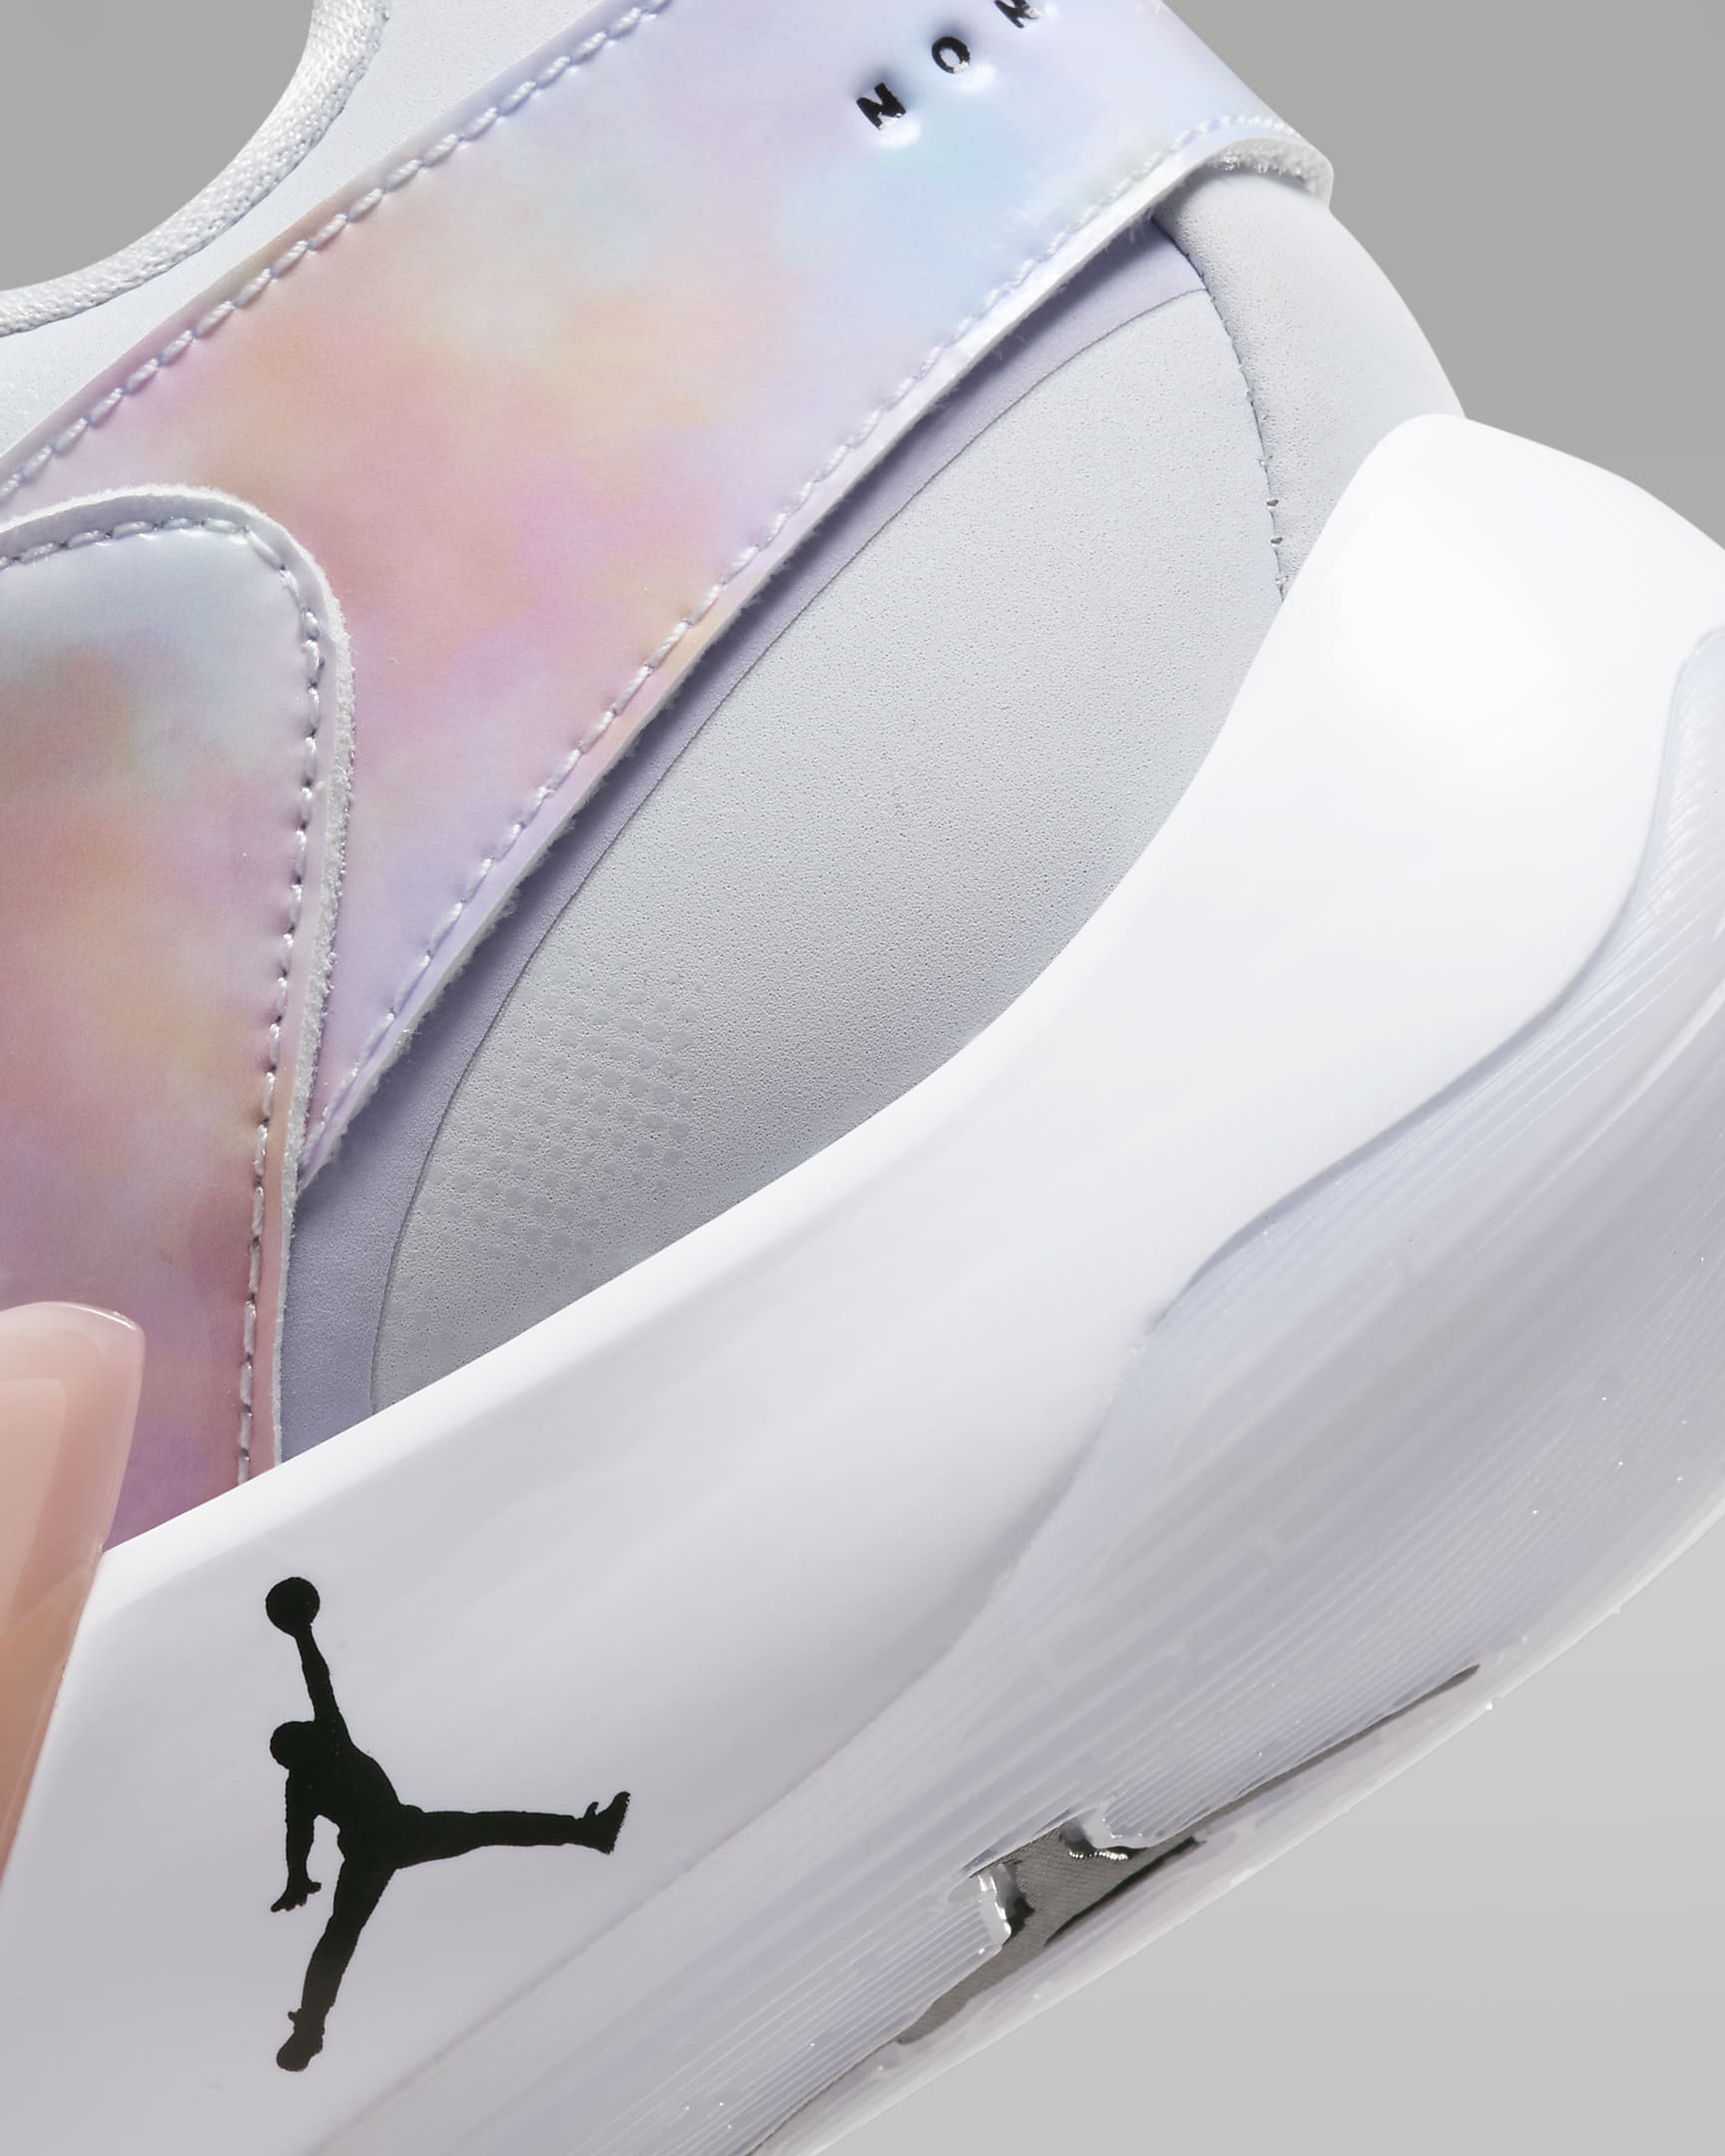 Luka 2 'Nebula' Basketball Shoes. Nike HR